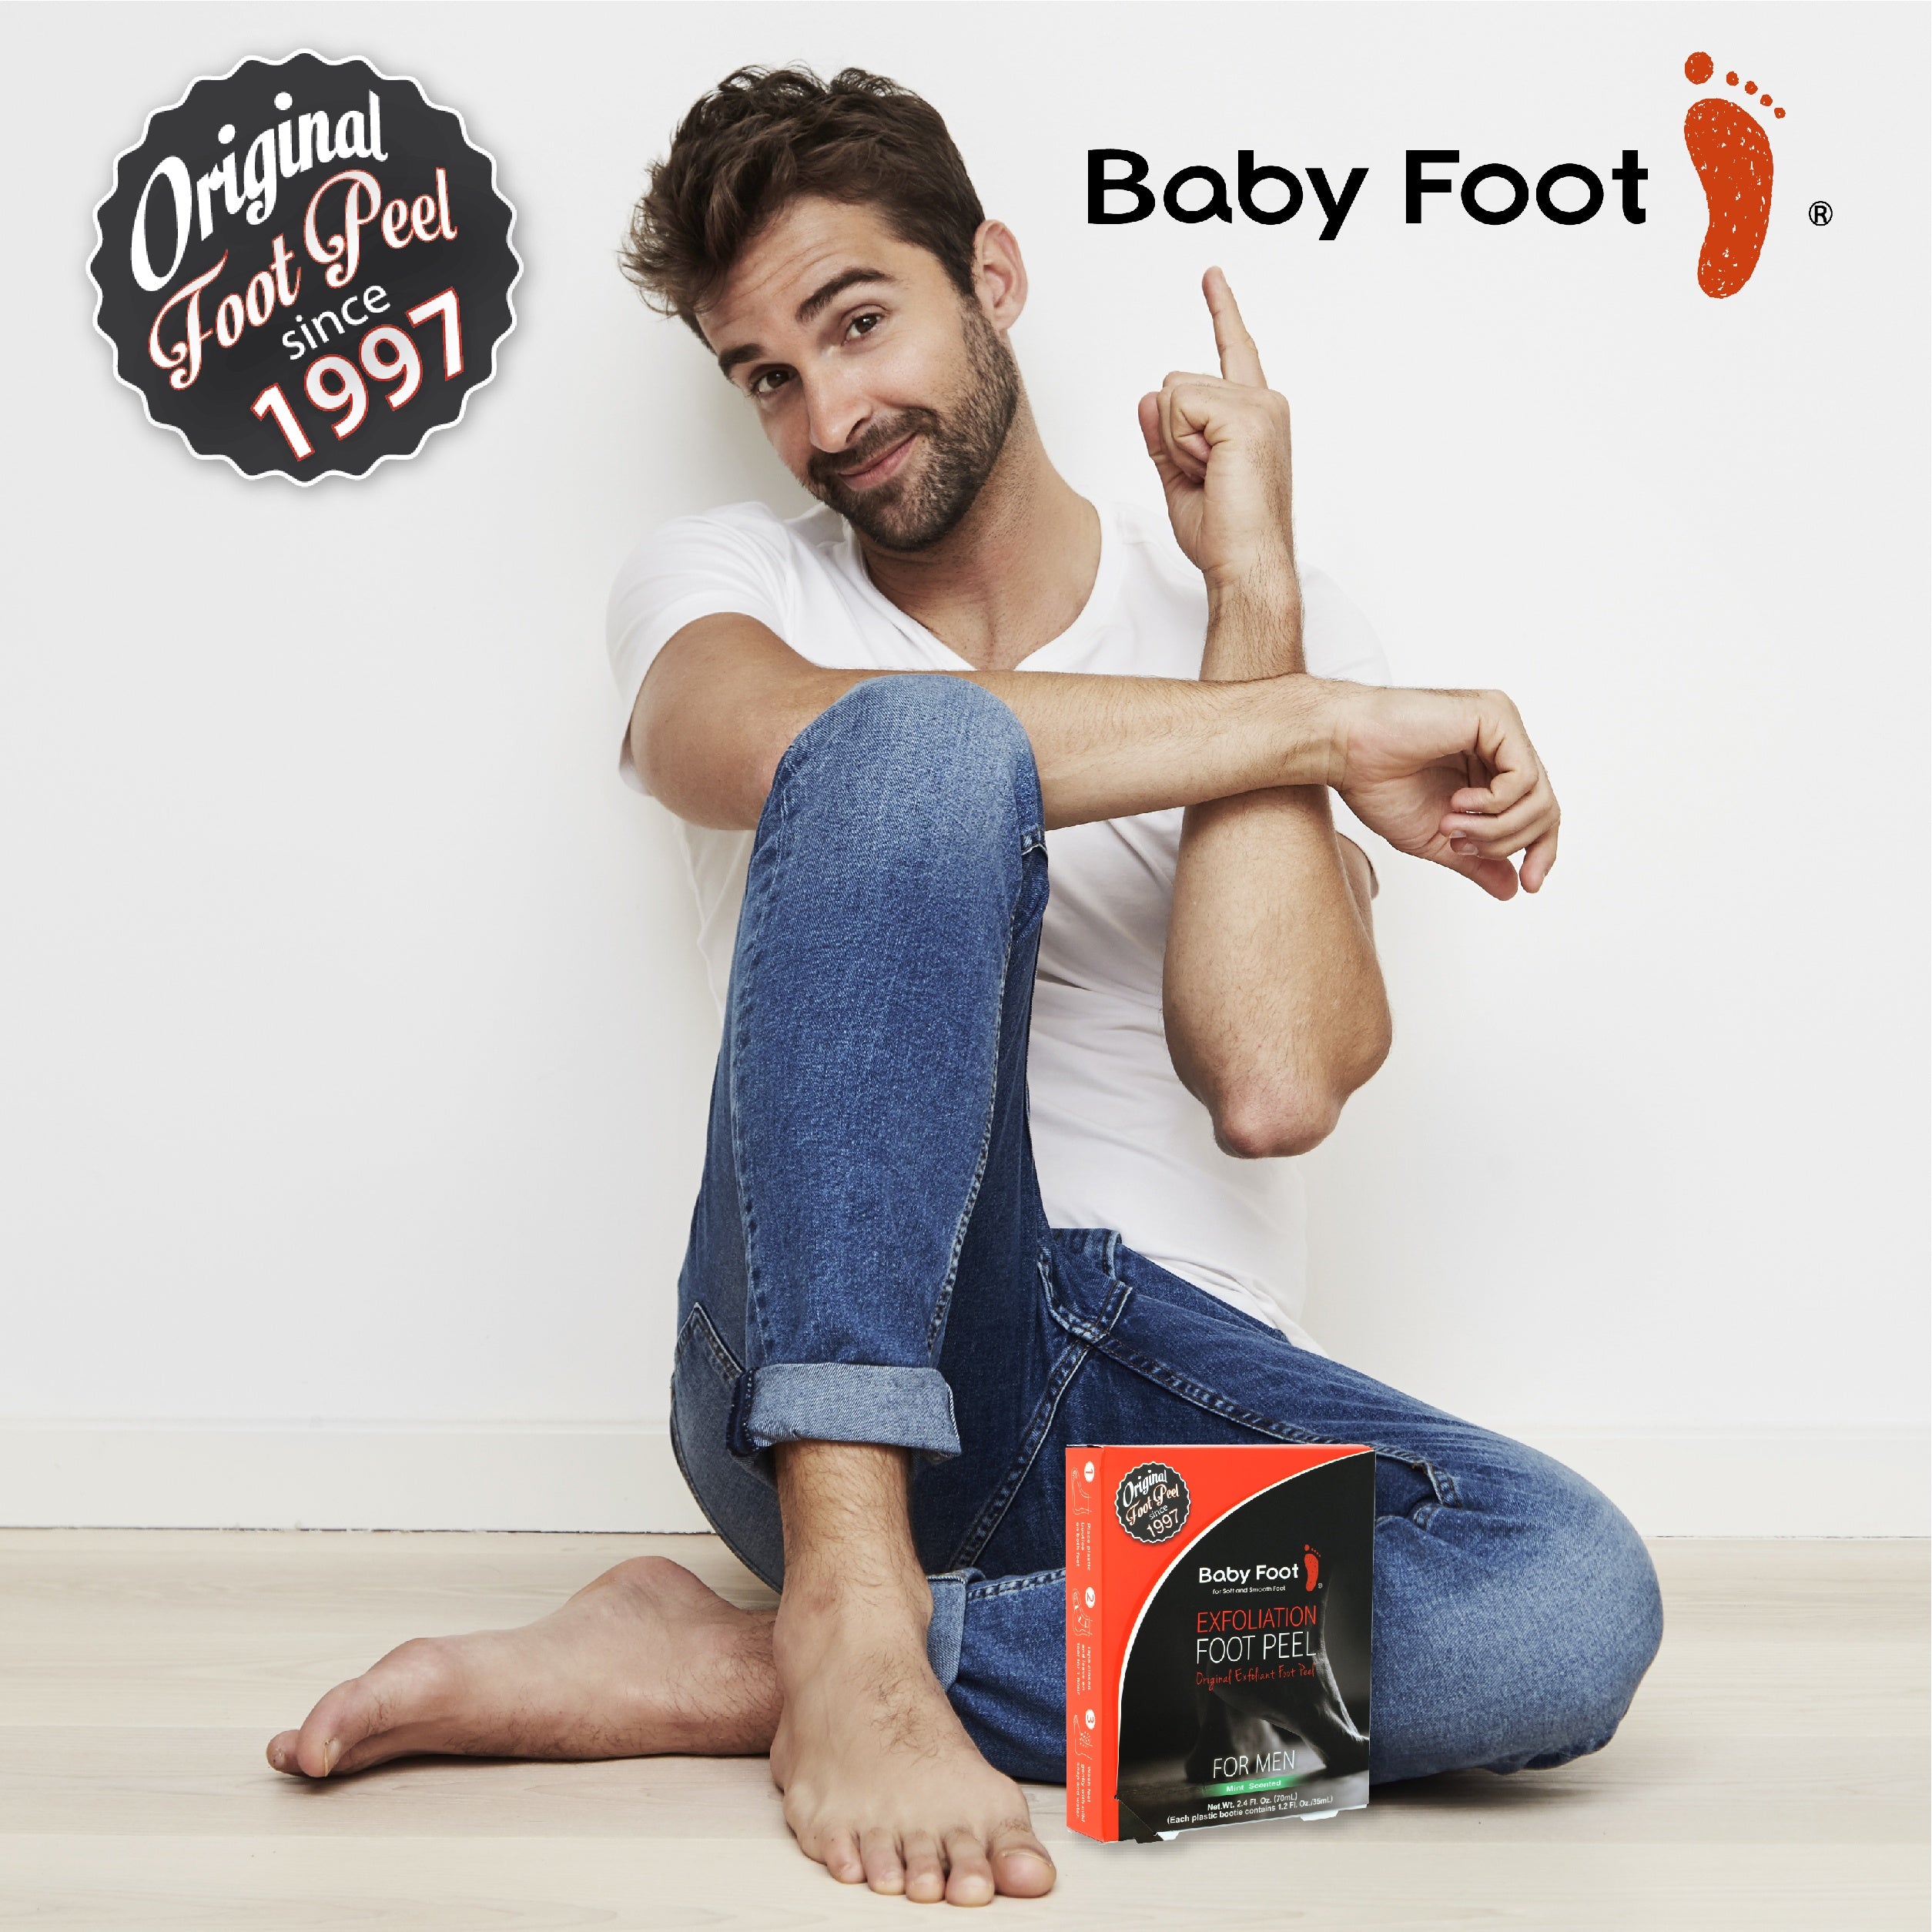 Exfoliation Foot Peel For Men | Baby Foot